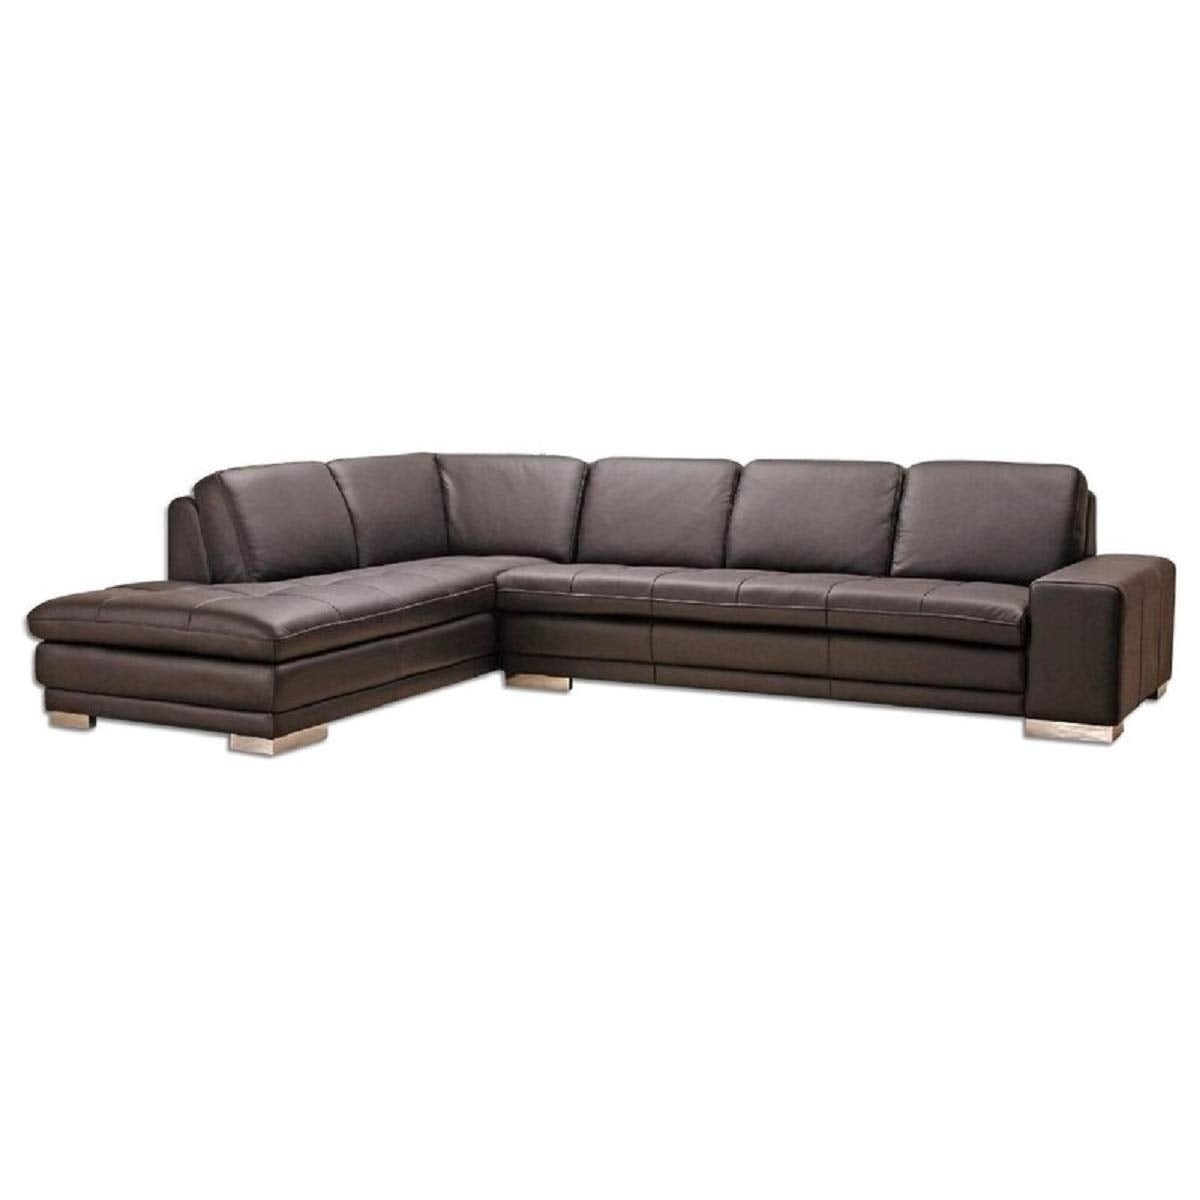 Designer Sofa Set:- L Shape 6 Seater Suede Fabric Sofa Set (Chocolate Brown)